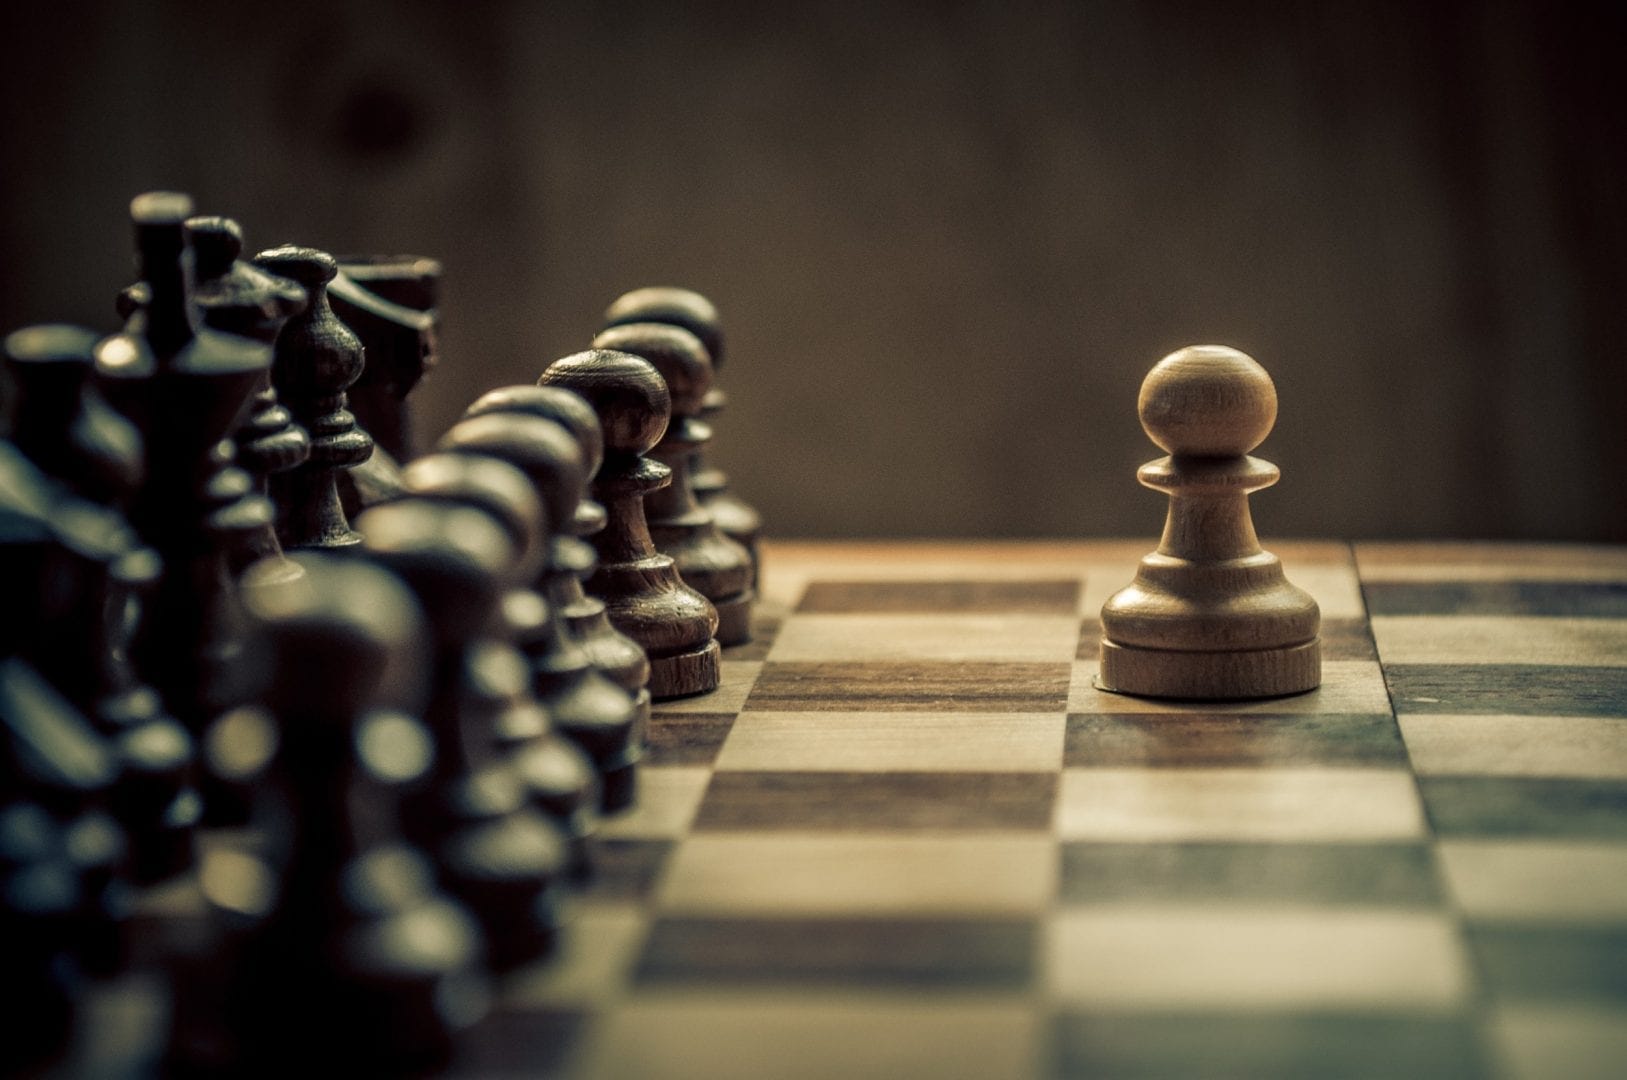 Xadrez: o que é, como jogar, regras básicas e história - Significados